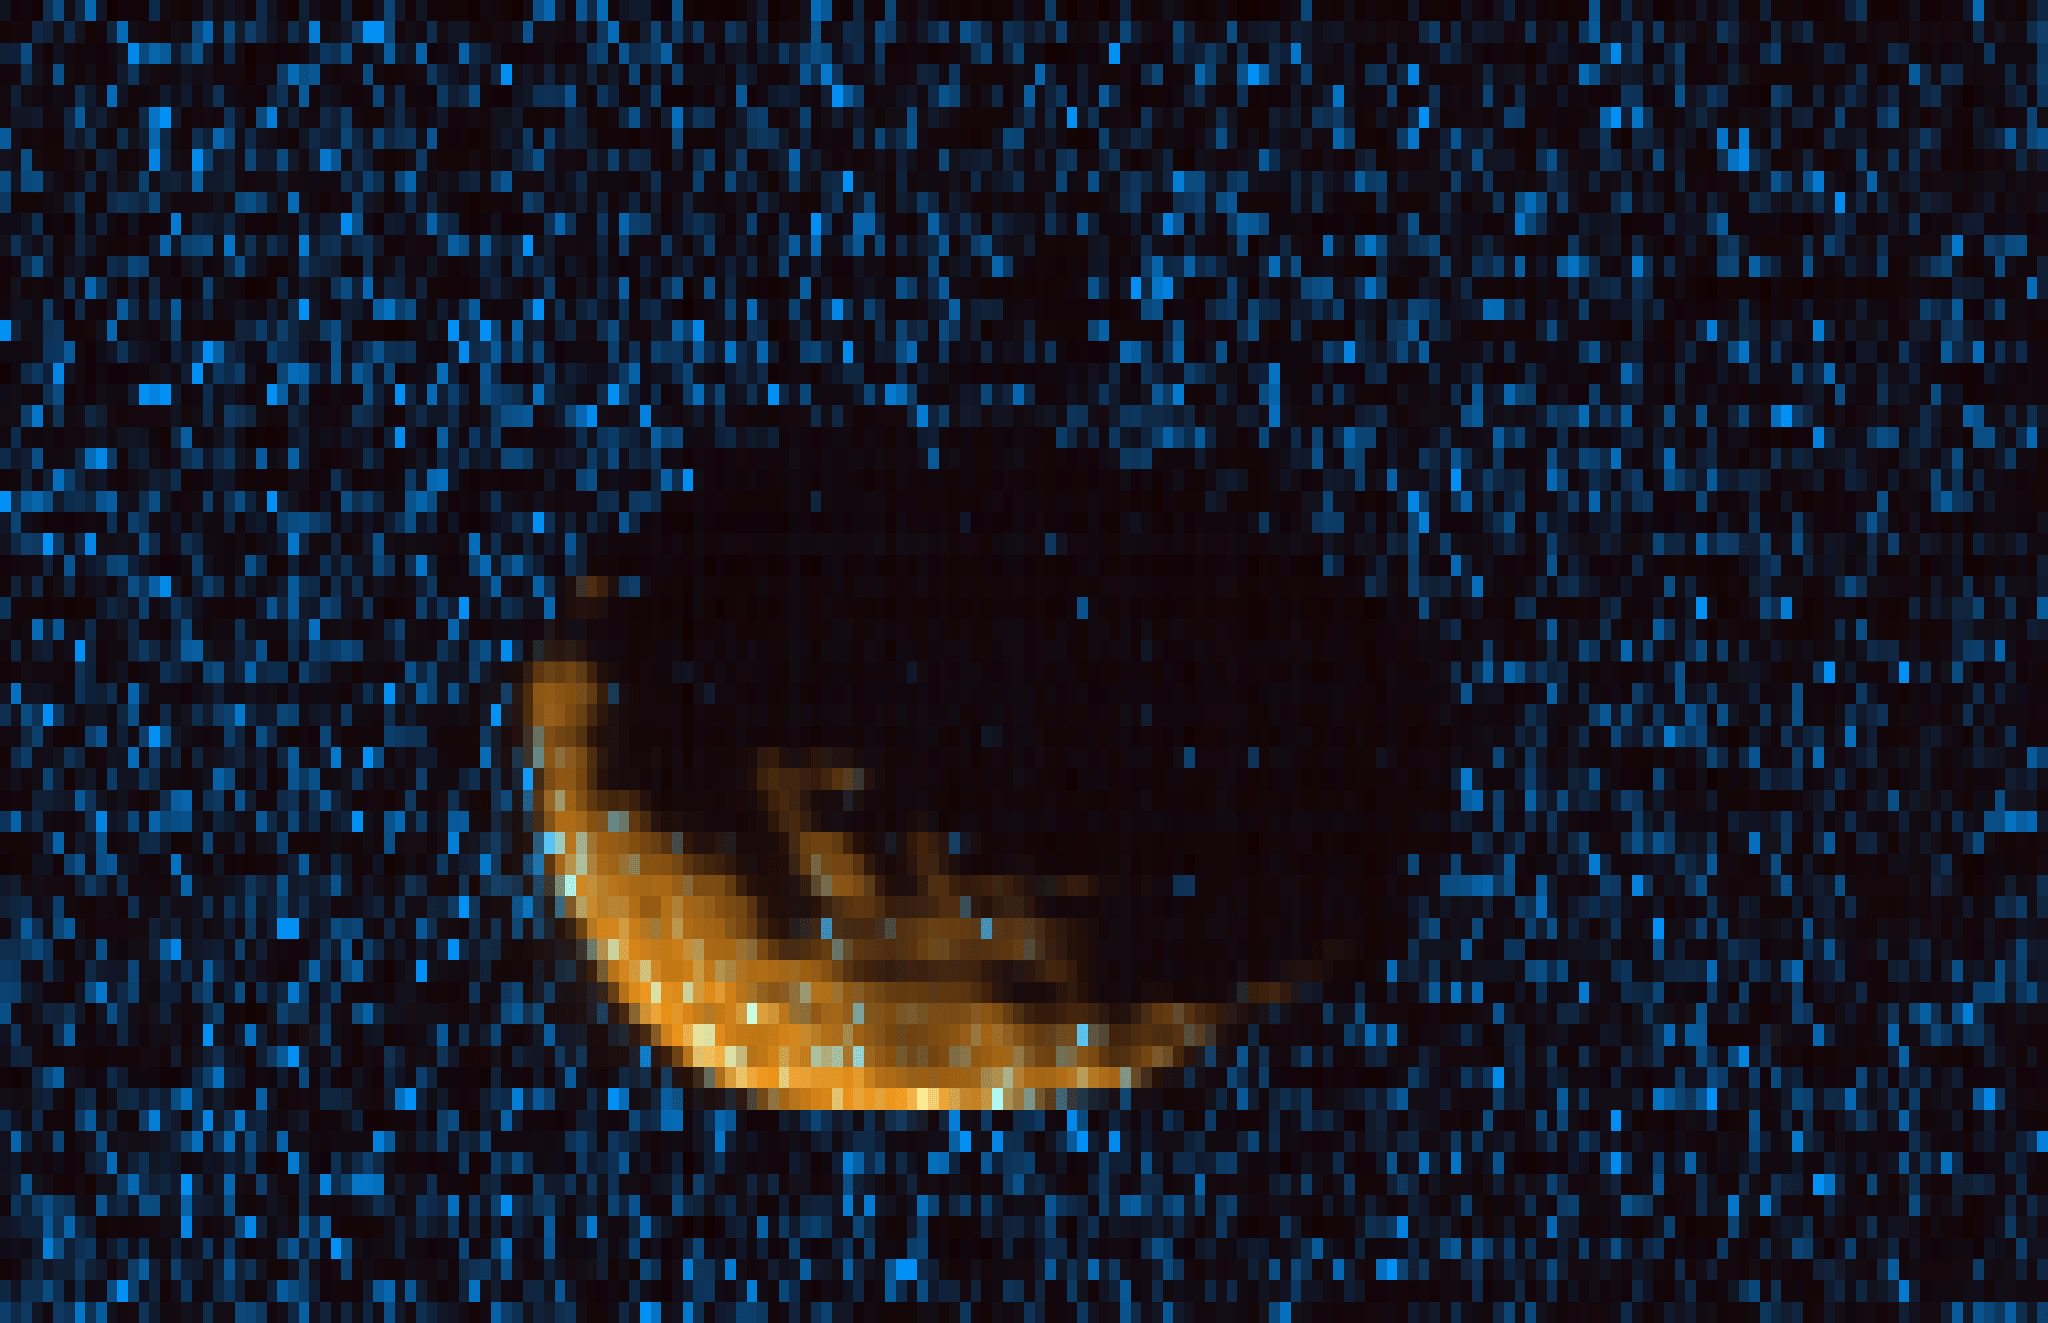 Phobos imaged by MAVEN